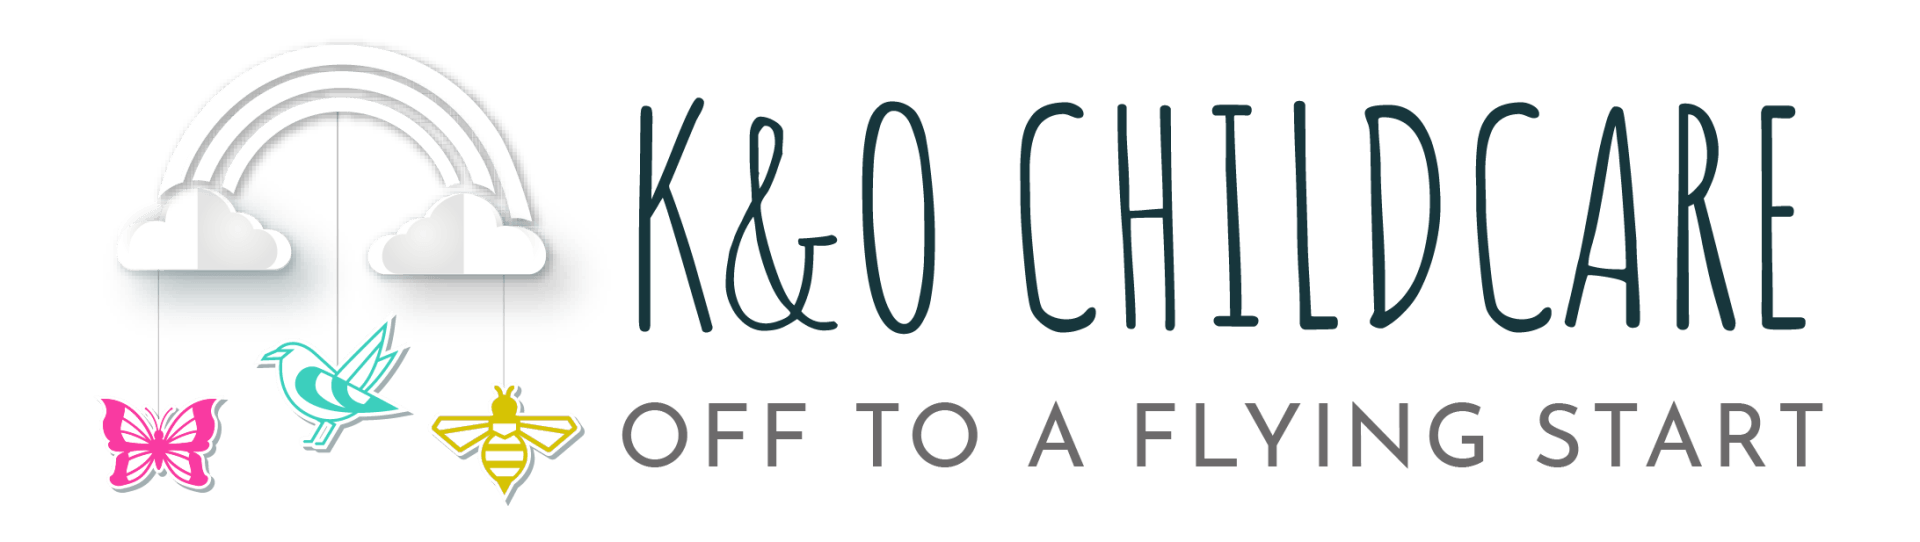 K&O Childcare - Home